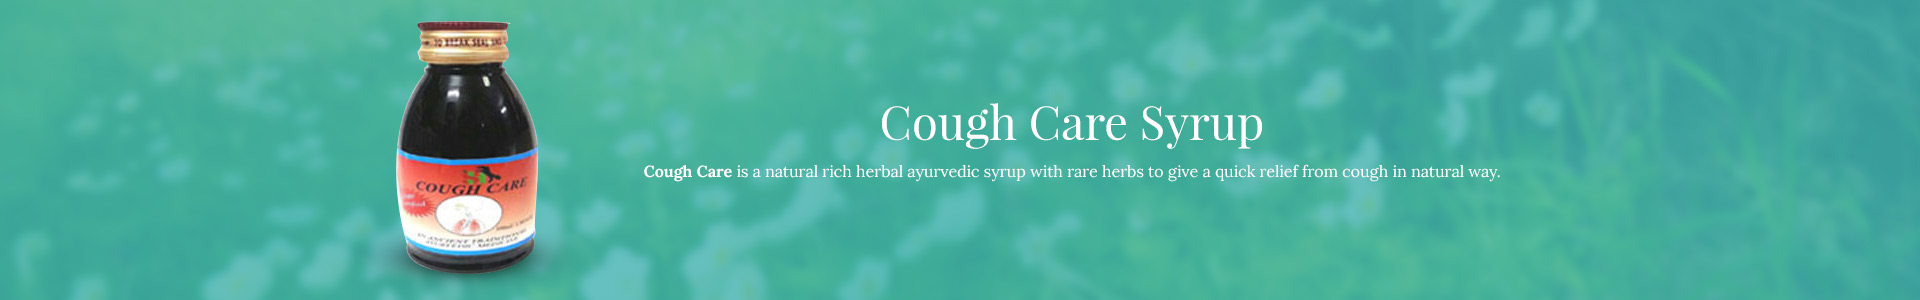 cough-care